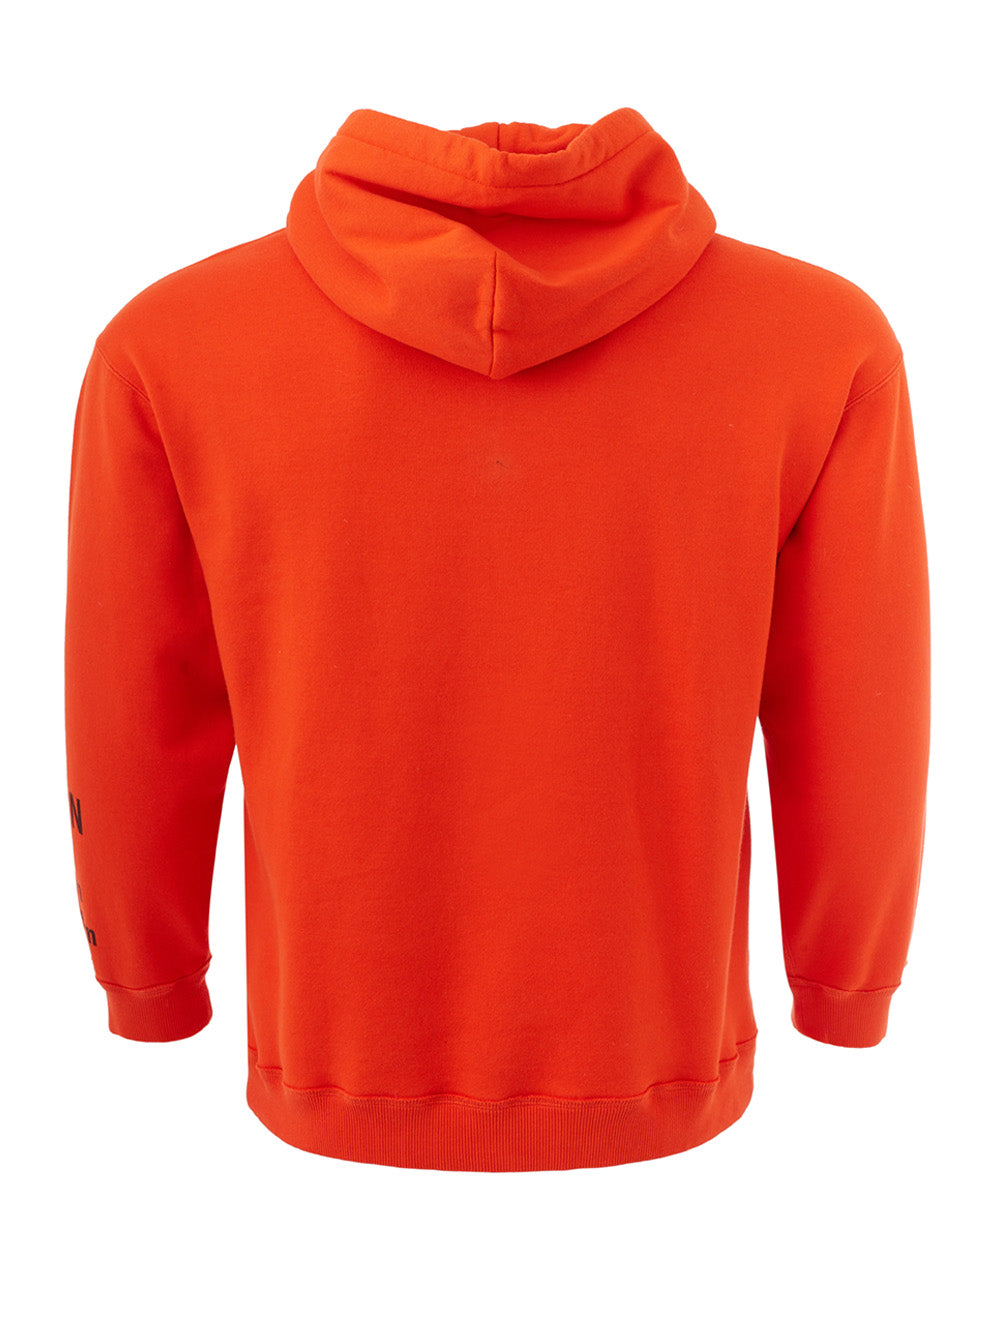 Oversized Valentino sweatshirt in orange